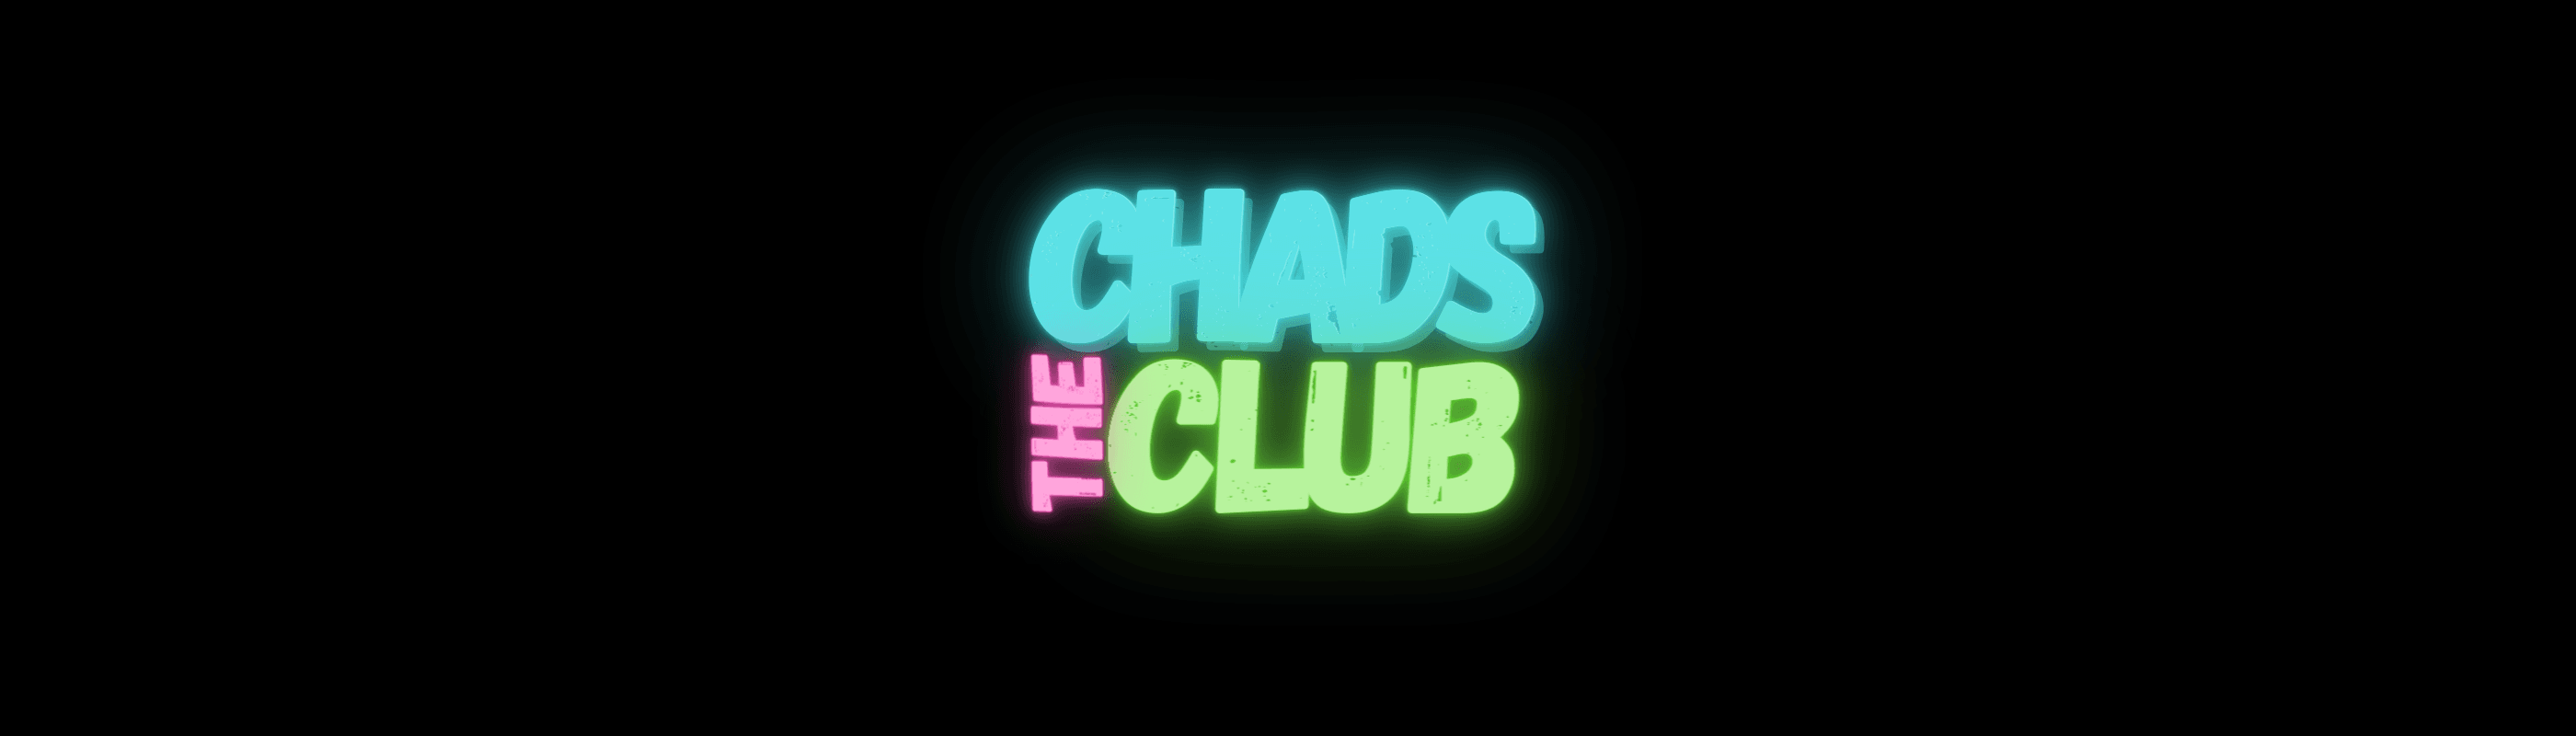 TheChadsClub banner